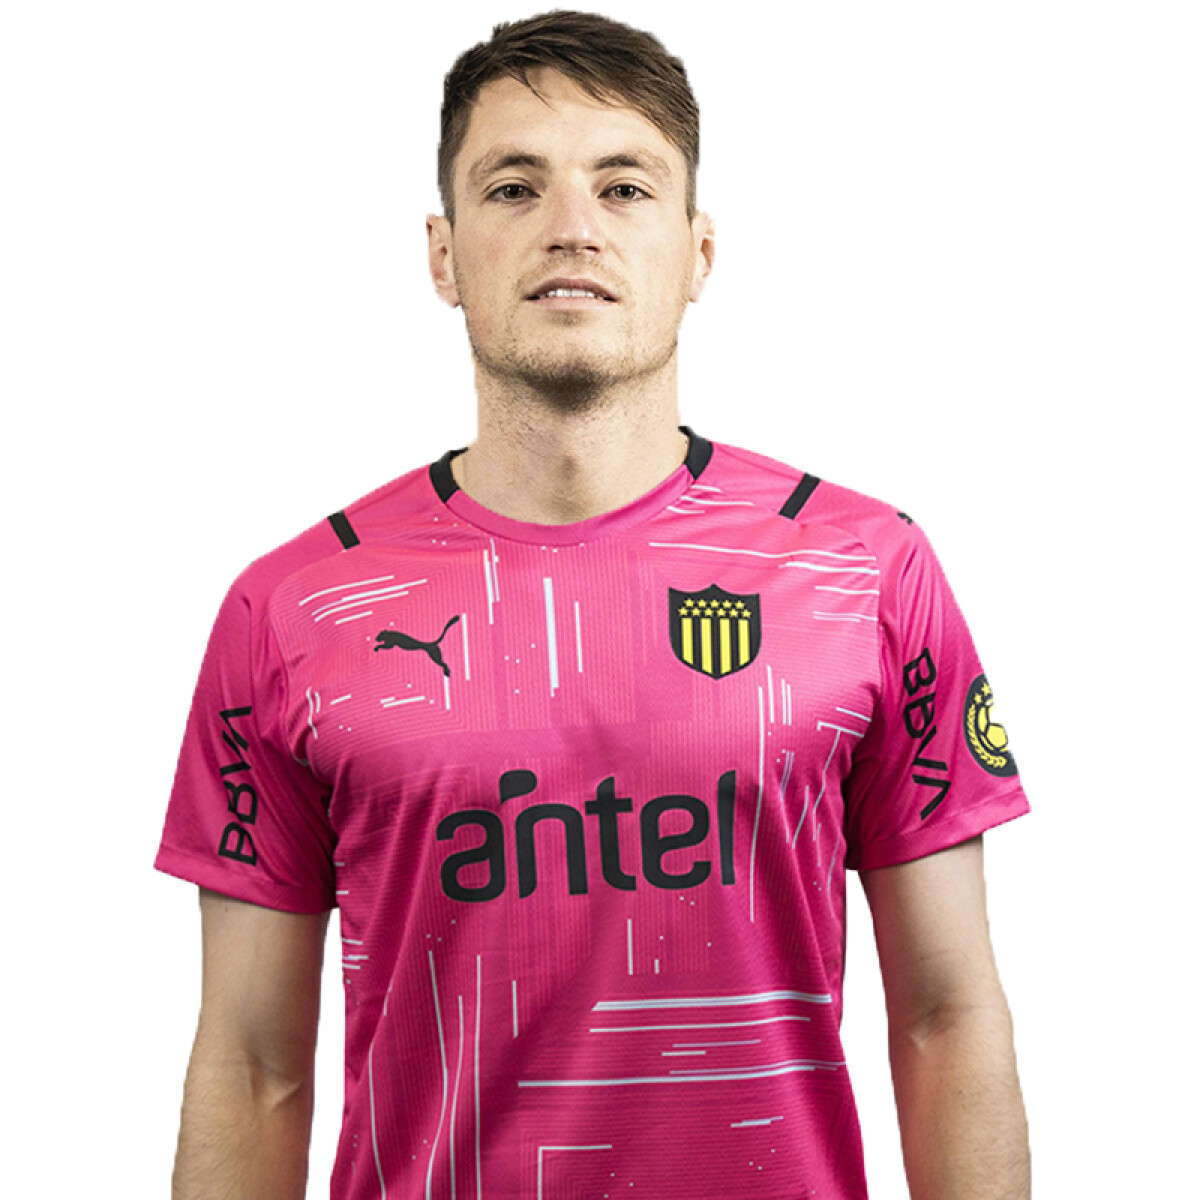 Peñarol GK Shirt 22- 77272301 - Rosa 